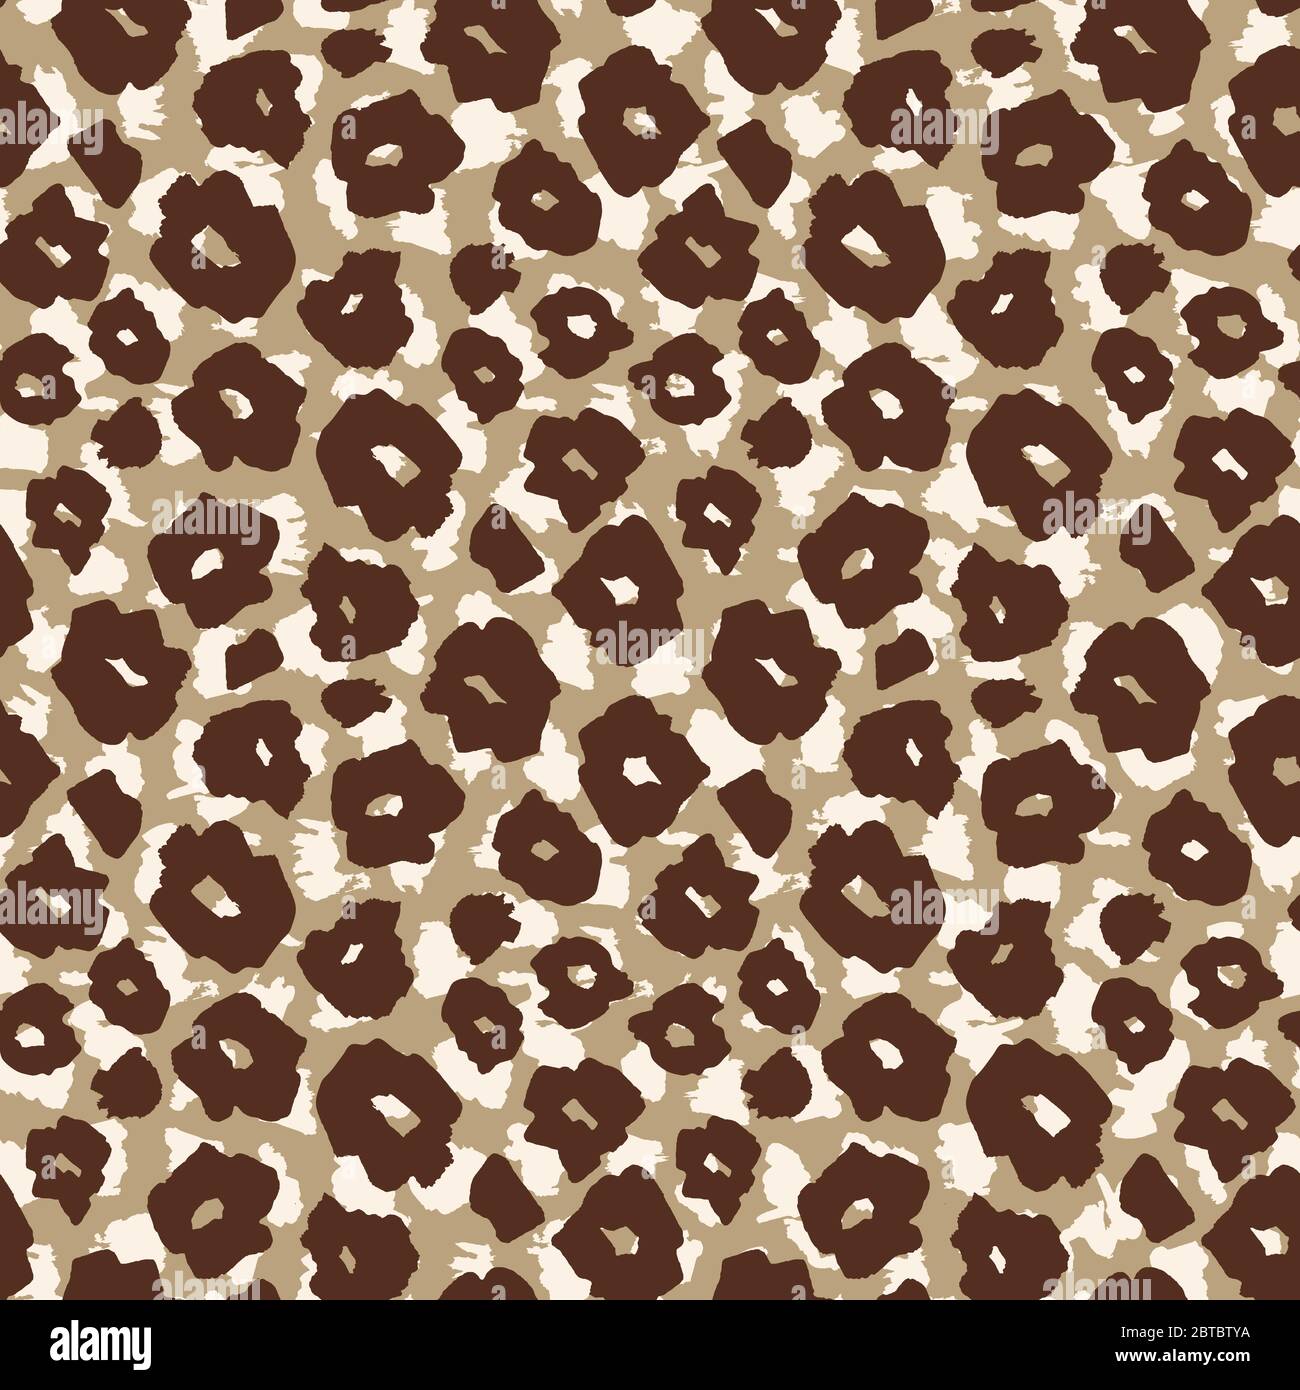 Safari pattern leopard print background, cheetah or jaguar animal skin, vector seamless design. African safari leopard or panther print pattern of brown spots on beige background, wild animals decor Stock Vector